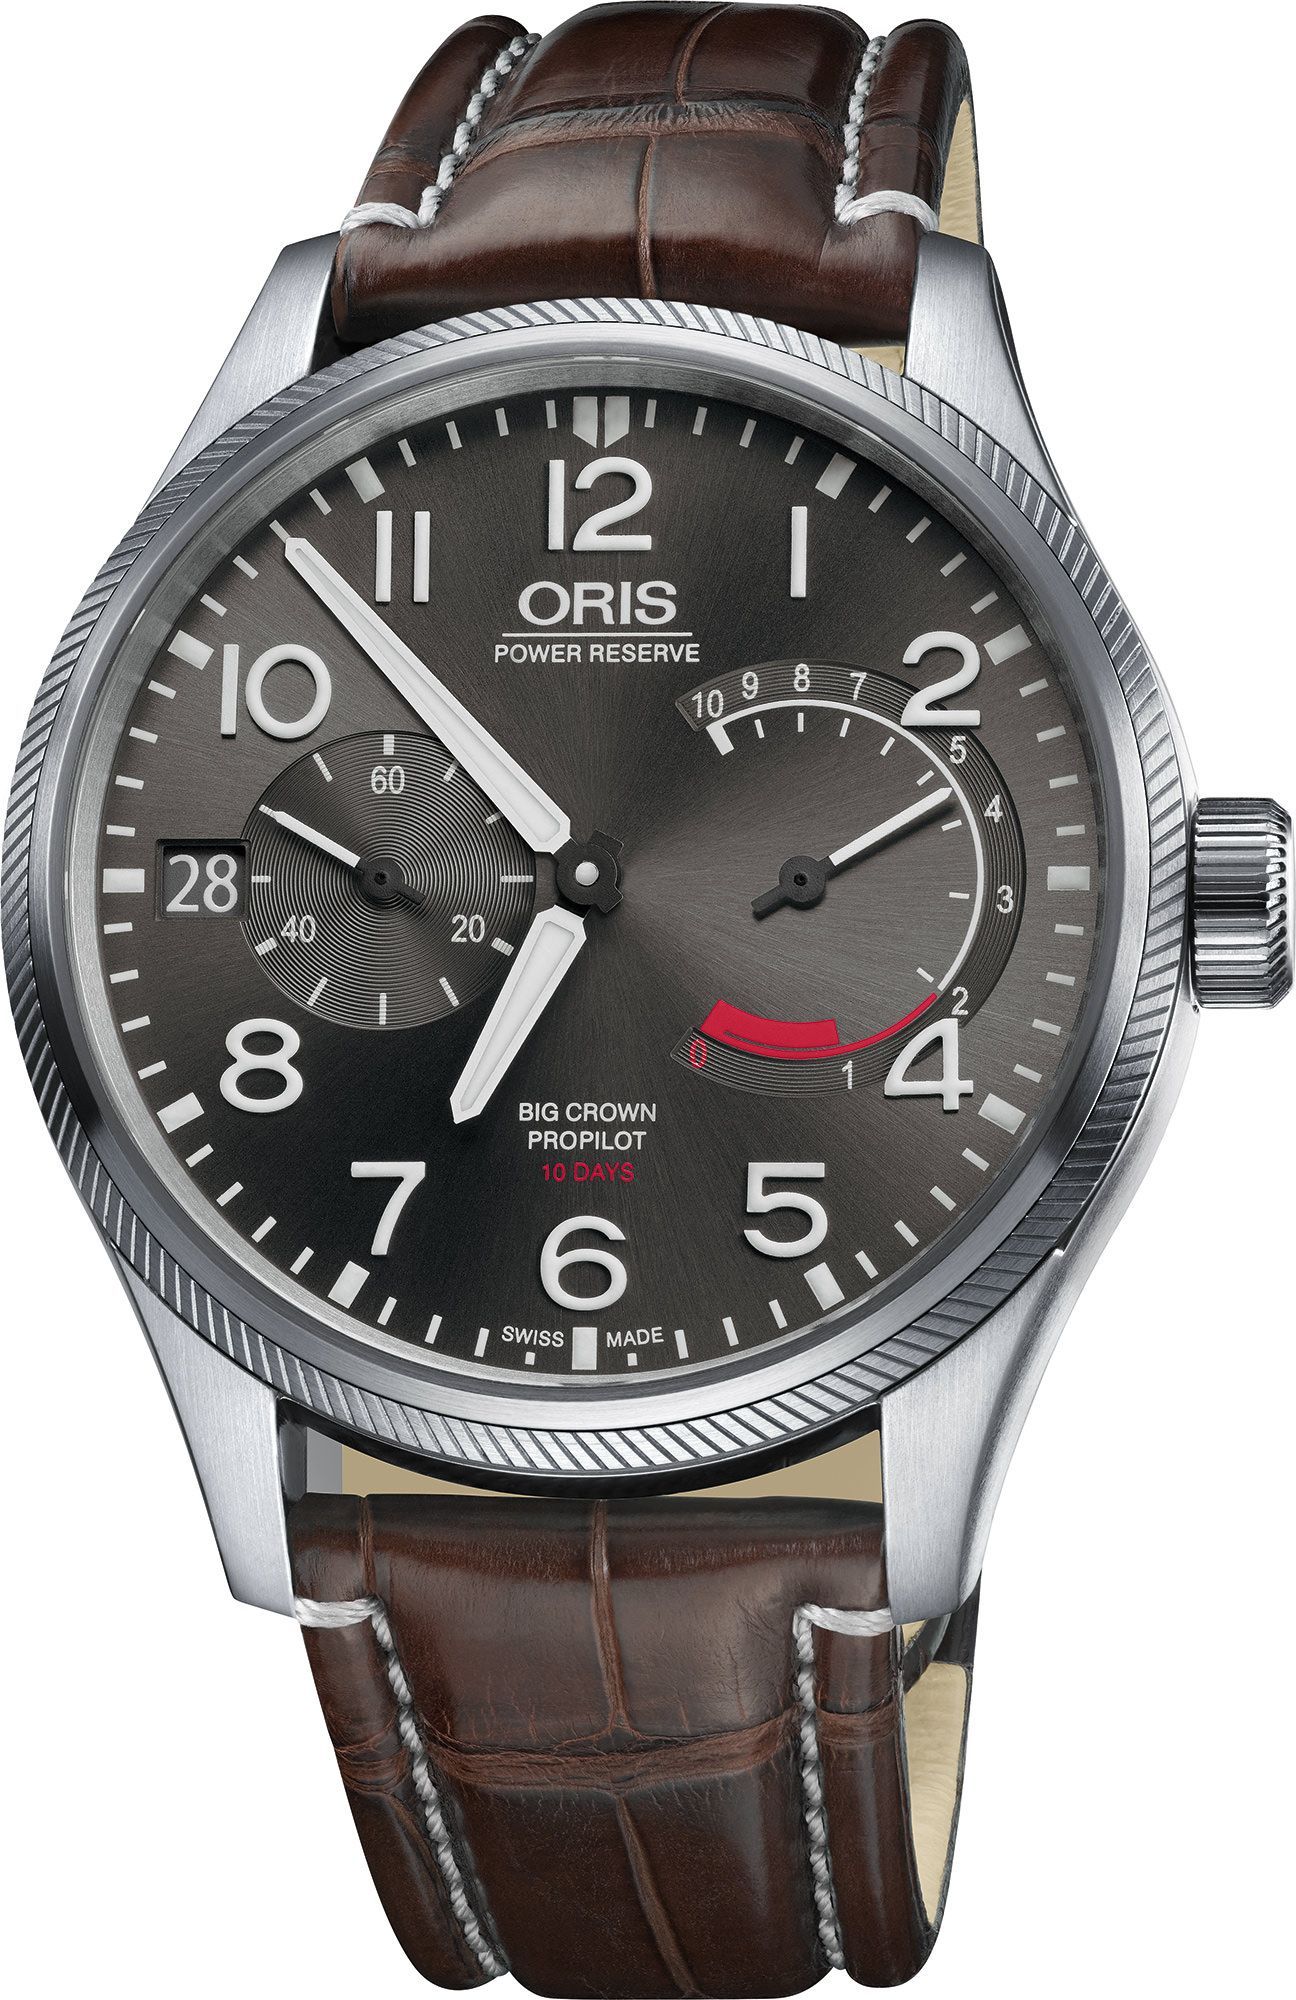 Oris ProPilot Big Crown ProPilot Calibre 111 Anthracite Dial 44 mm Manual Winding Watch For Men - 1